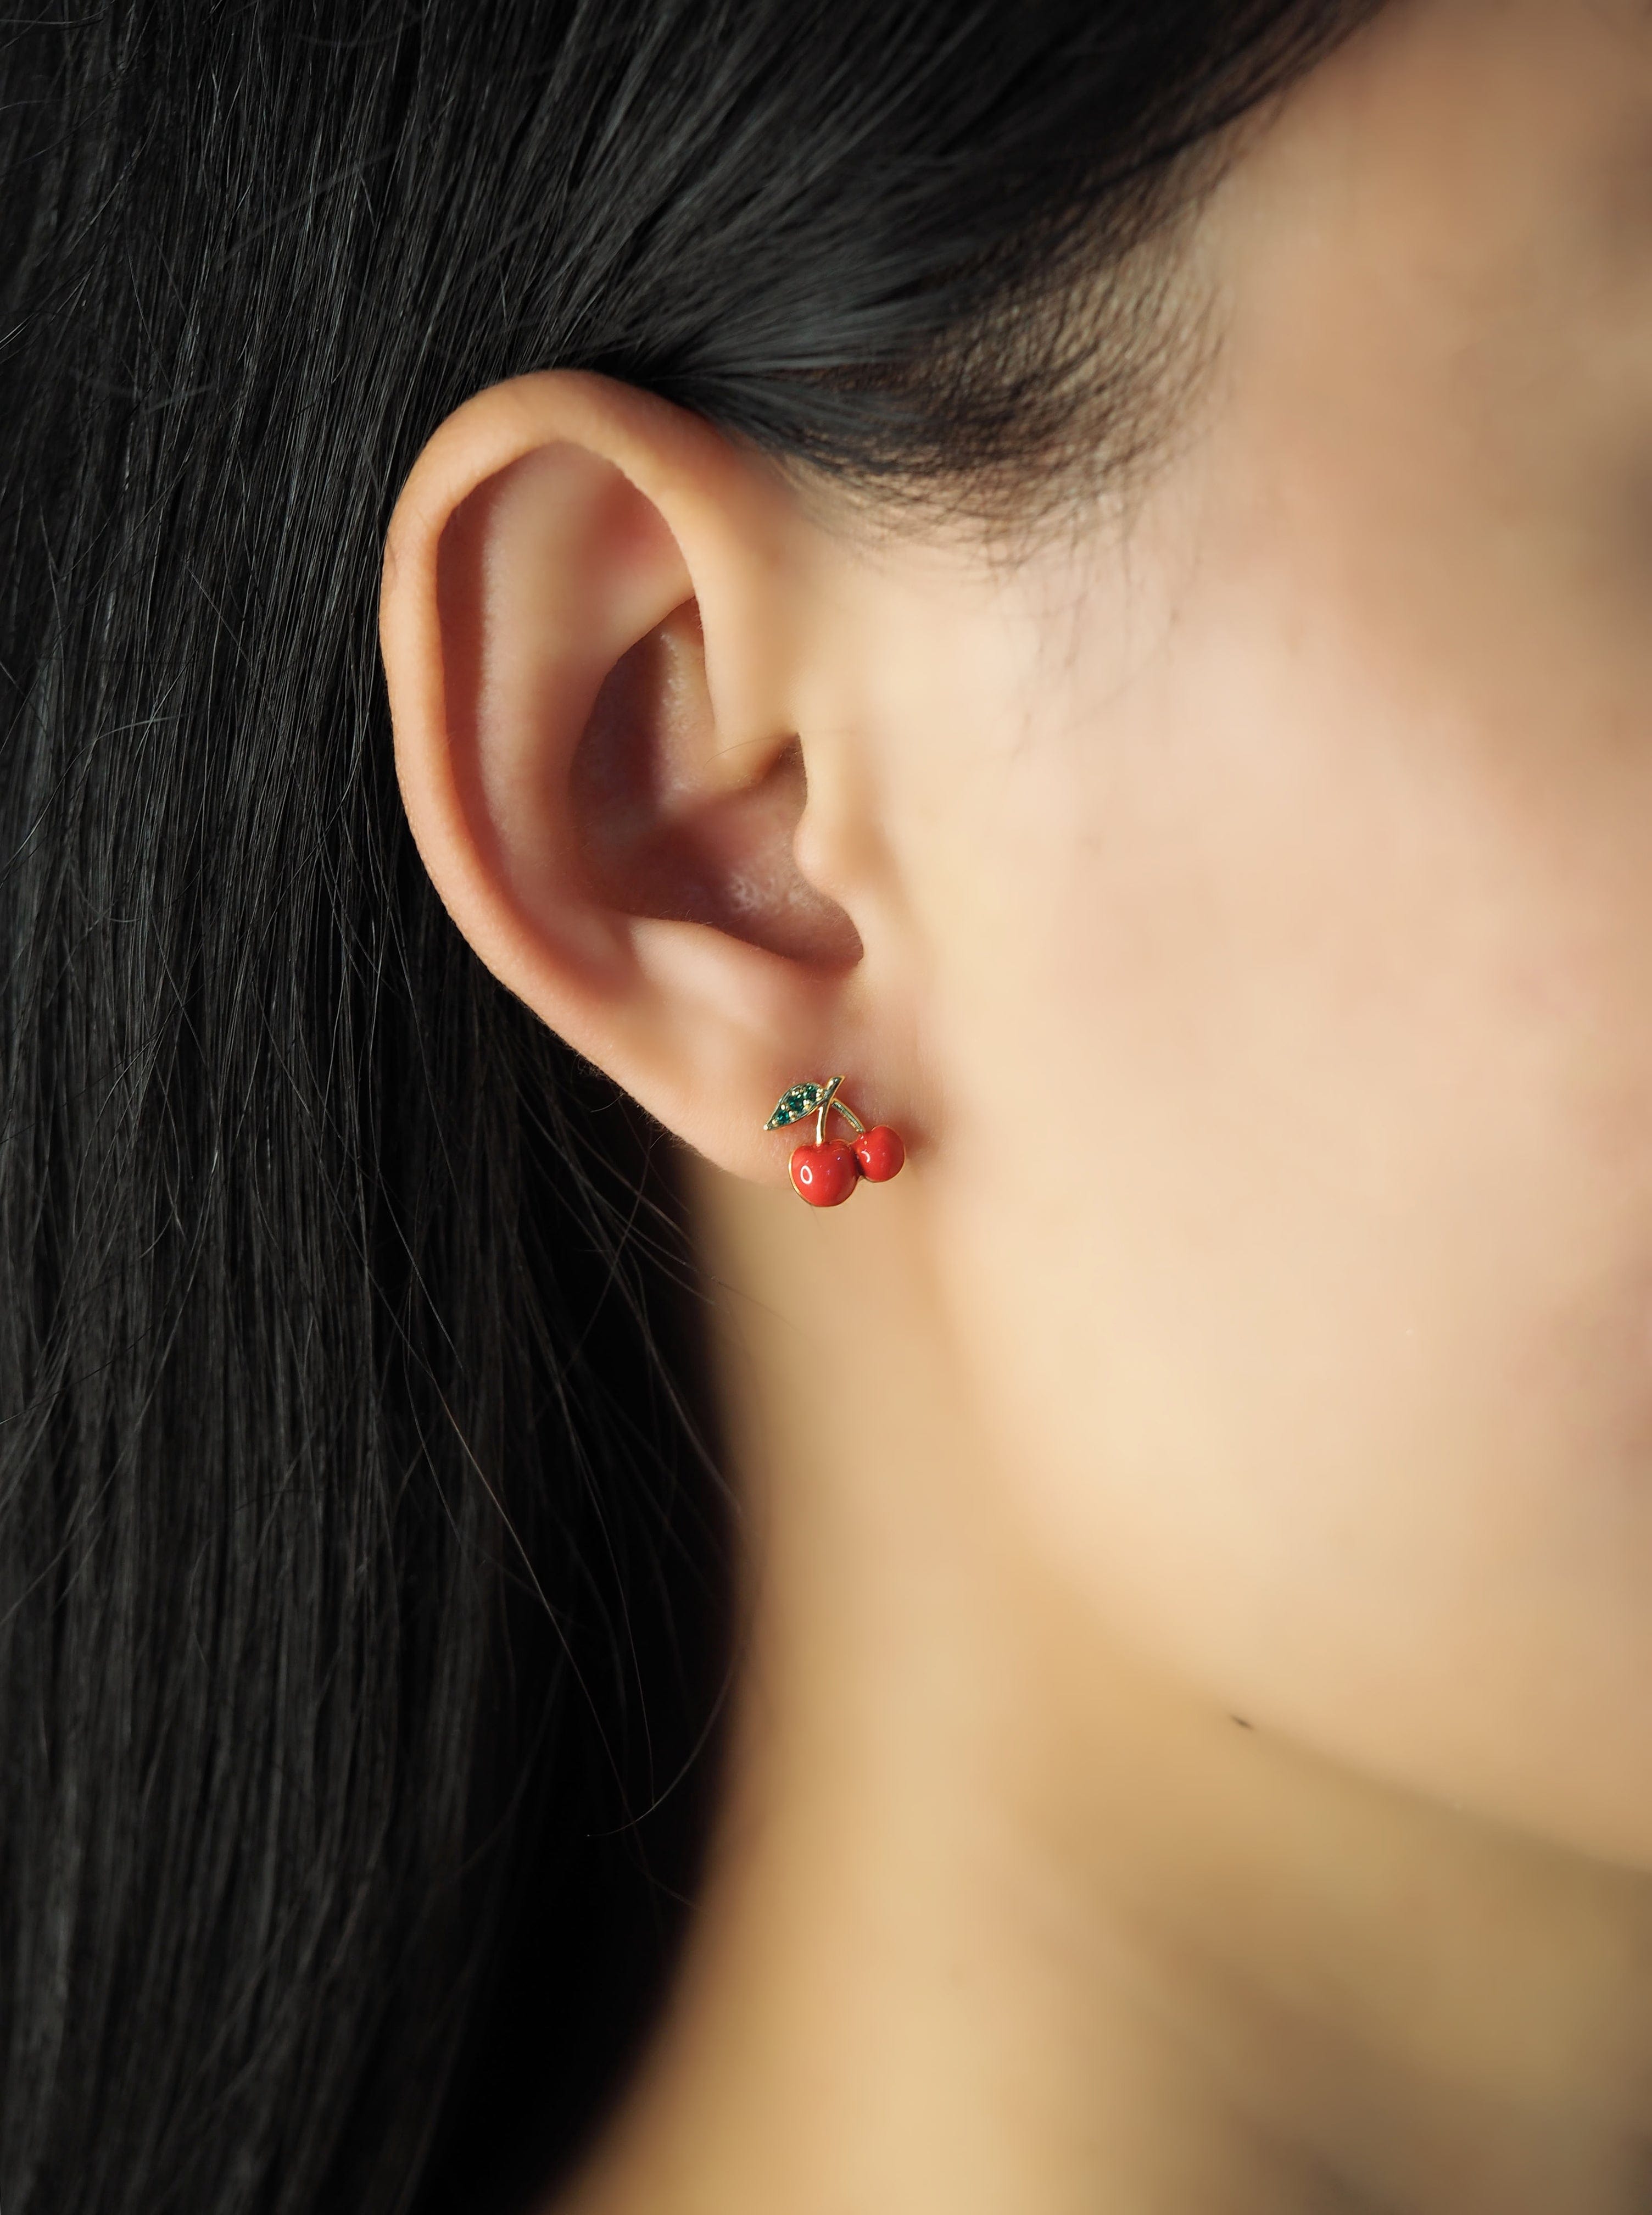 TAI JEWELRY Earrings Red Cherry Earrings